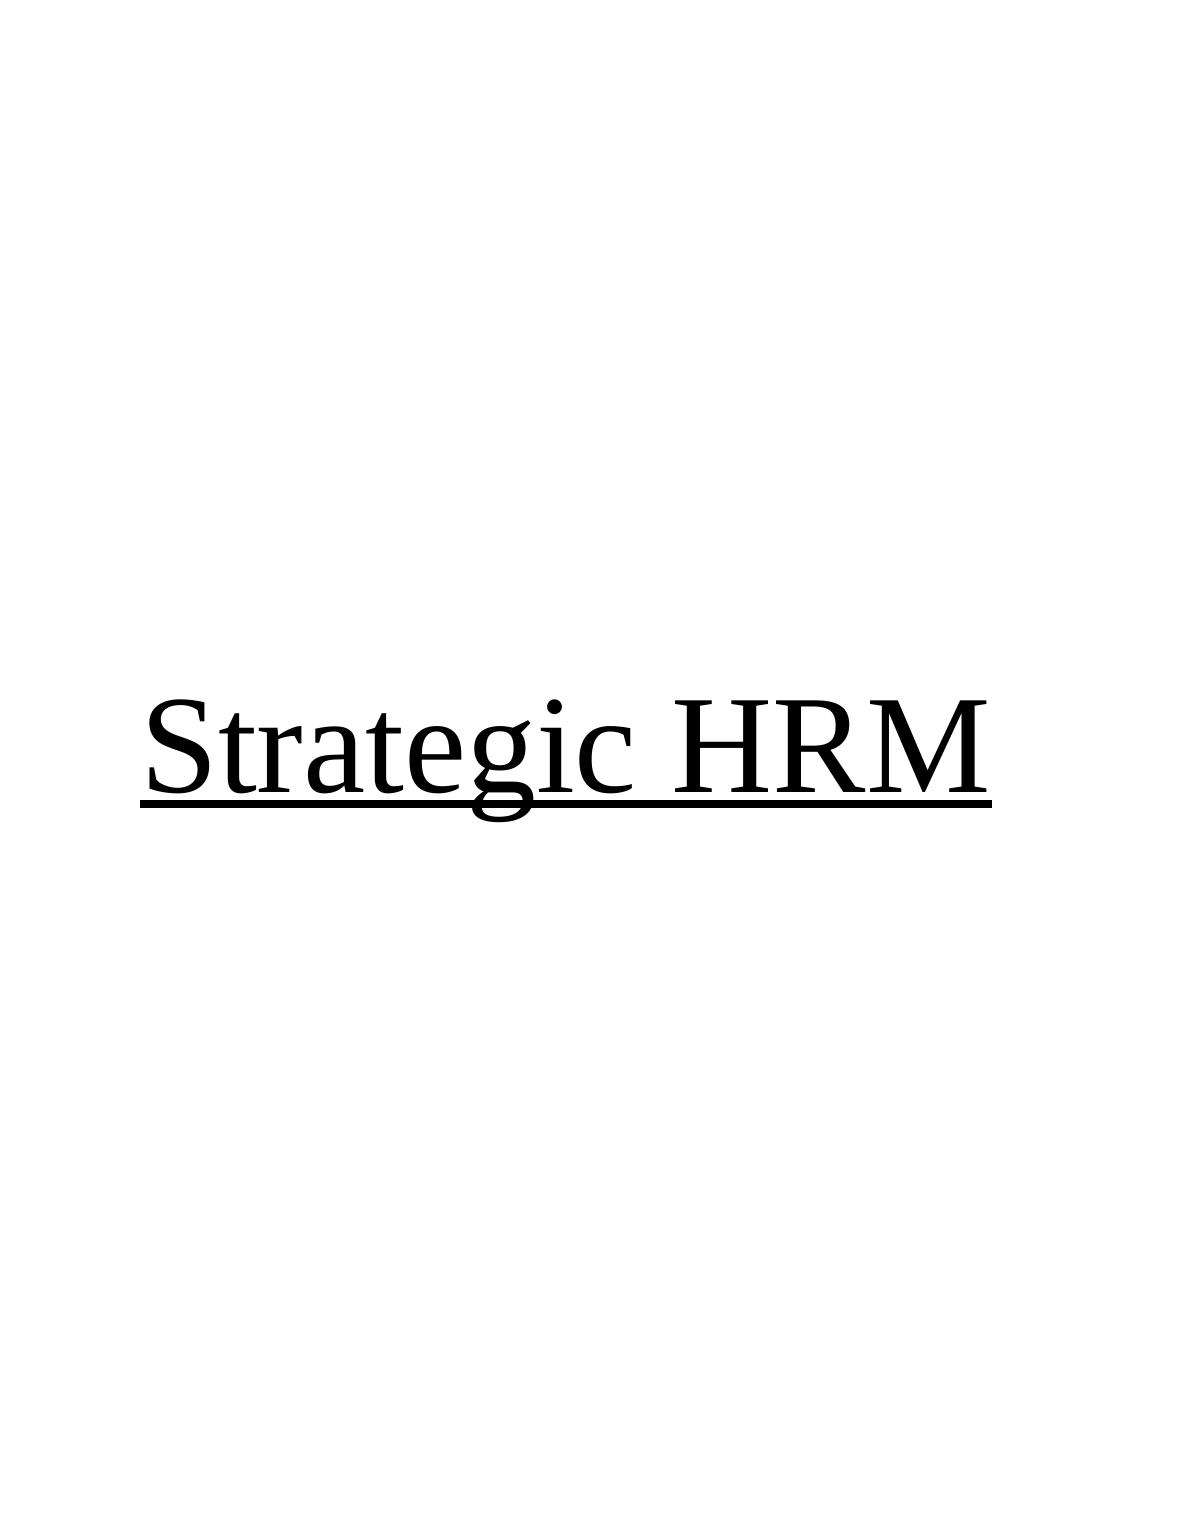 (SHRM) Strategic Human resource management: Assignment_1